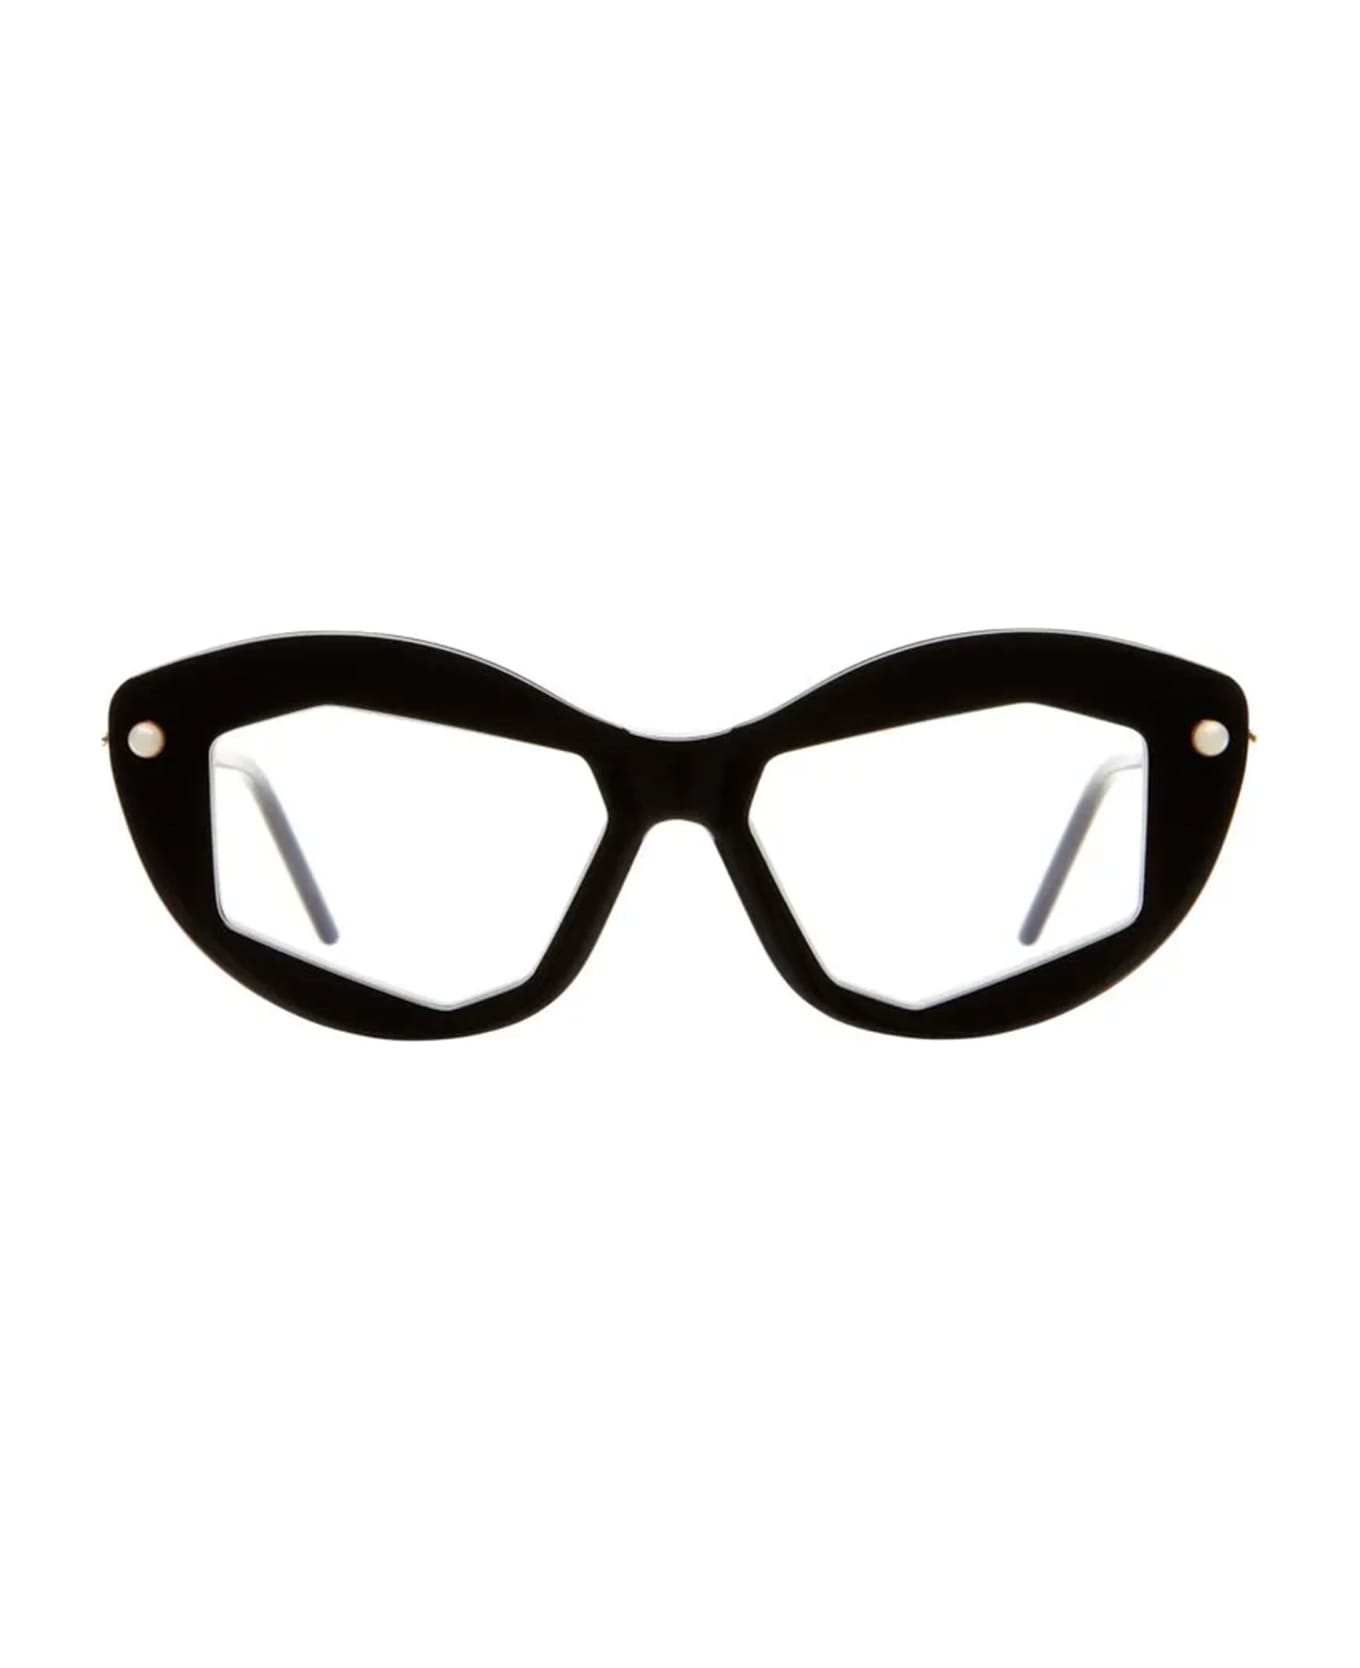 Kuboraum Mask P16 - Black Shine Rx Glasses - Black